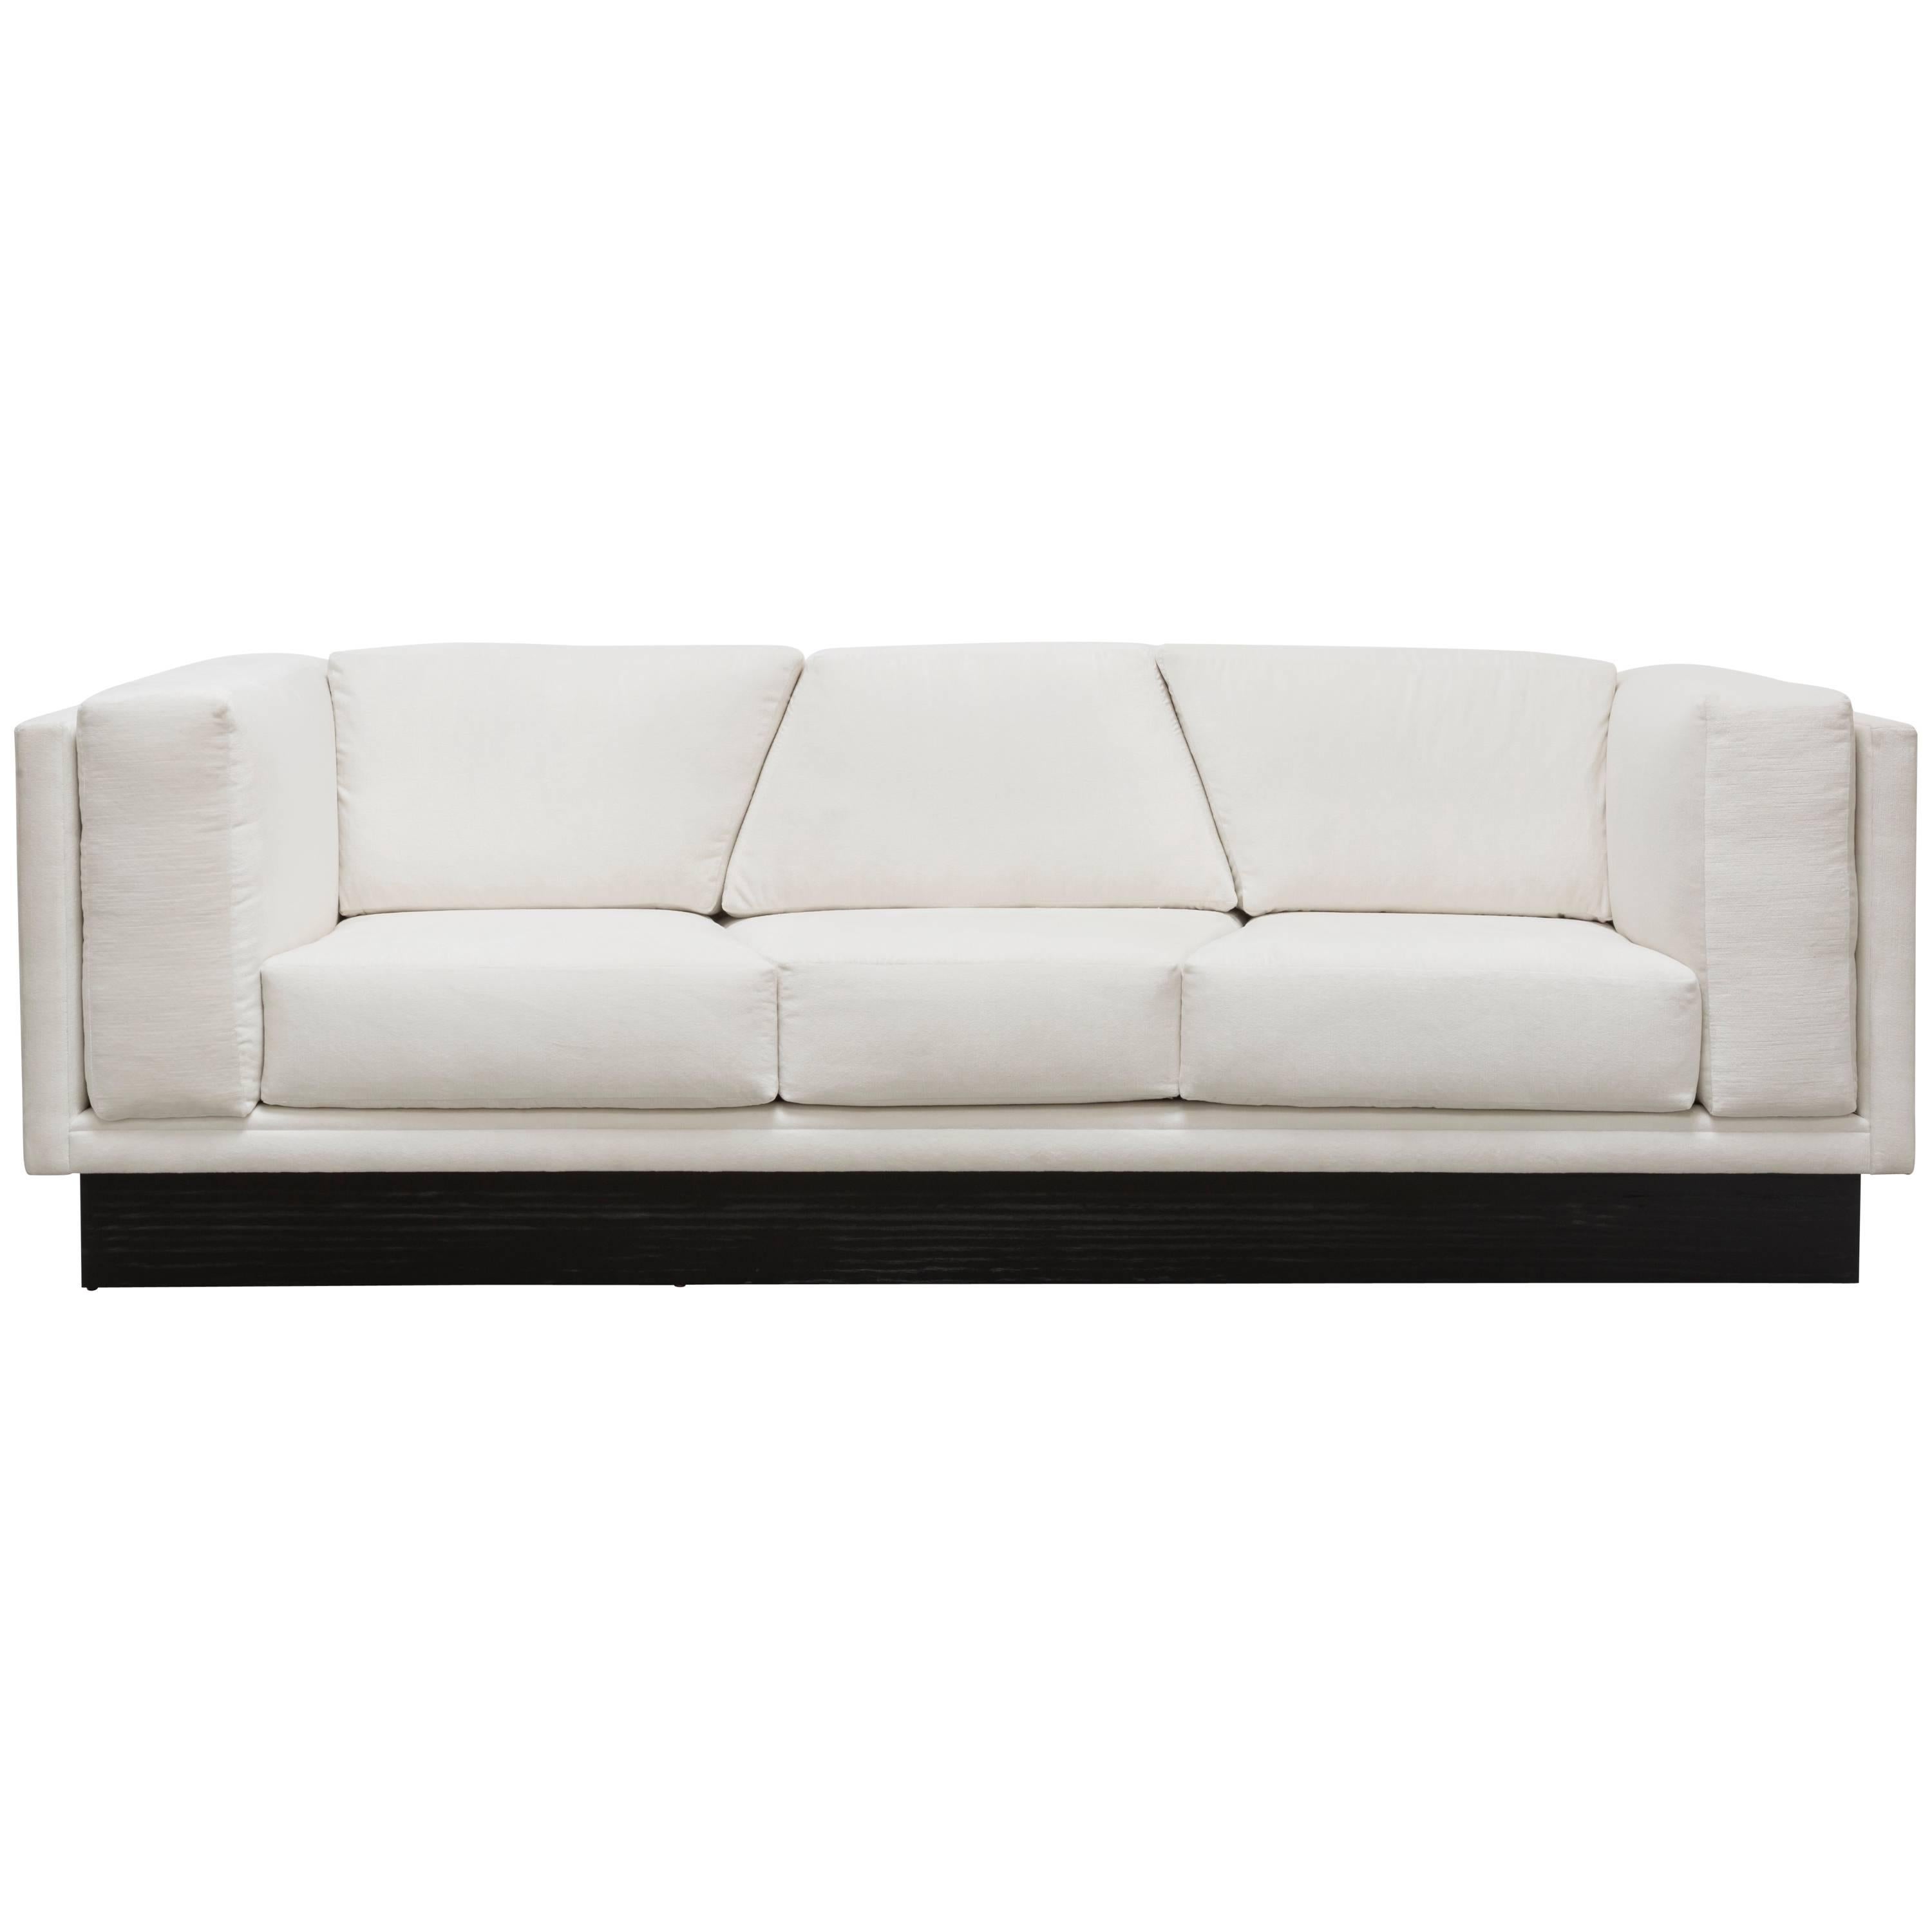 NUAGE SOFA - Modernes asymmetrisches Sofa aus antikem Samt 